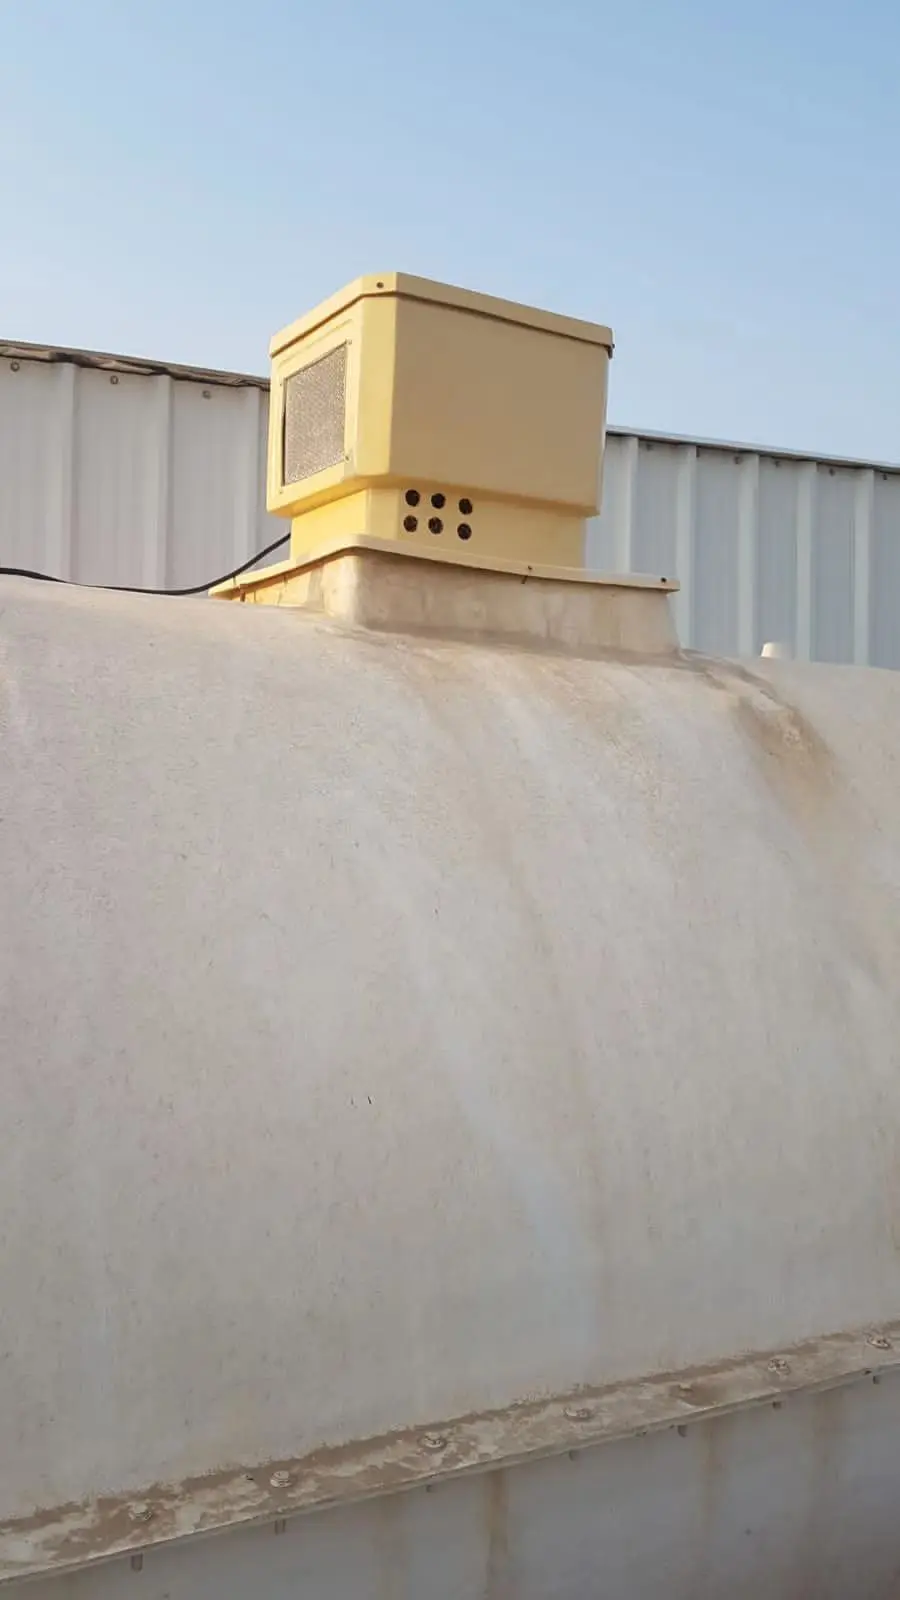 Industrial Cool Shower Tank/Chiller Water Tank Air Fan Cooling Water Tank Cooler